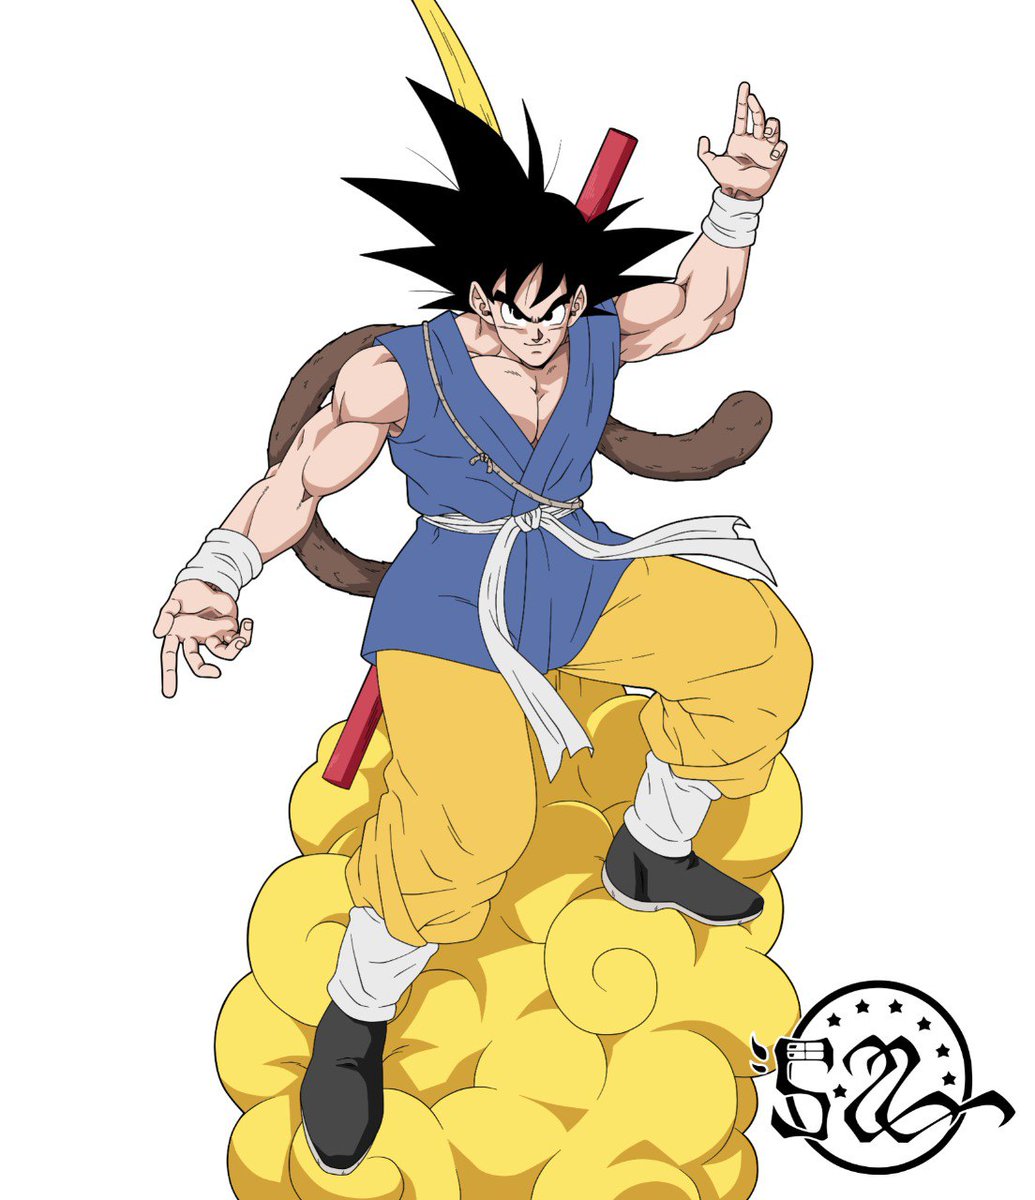 Goku de GT! 
Haré un como alternativo ya que me gustaría que en un futuro en mi fanmanga tenga otro dogi!!